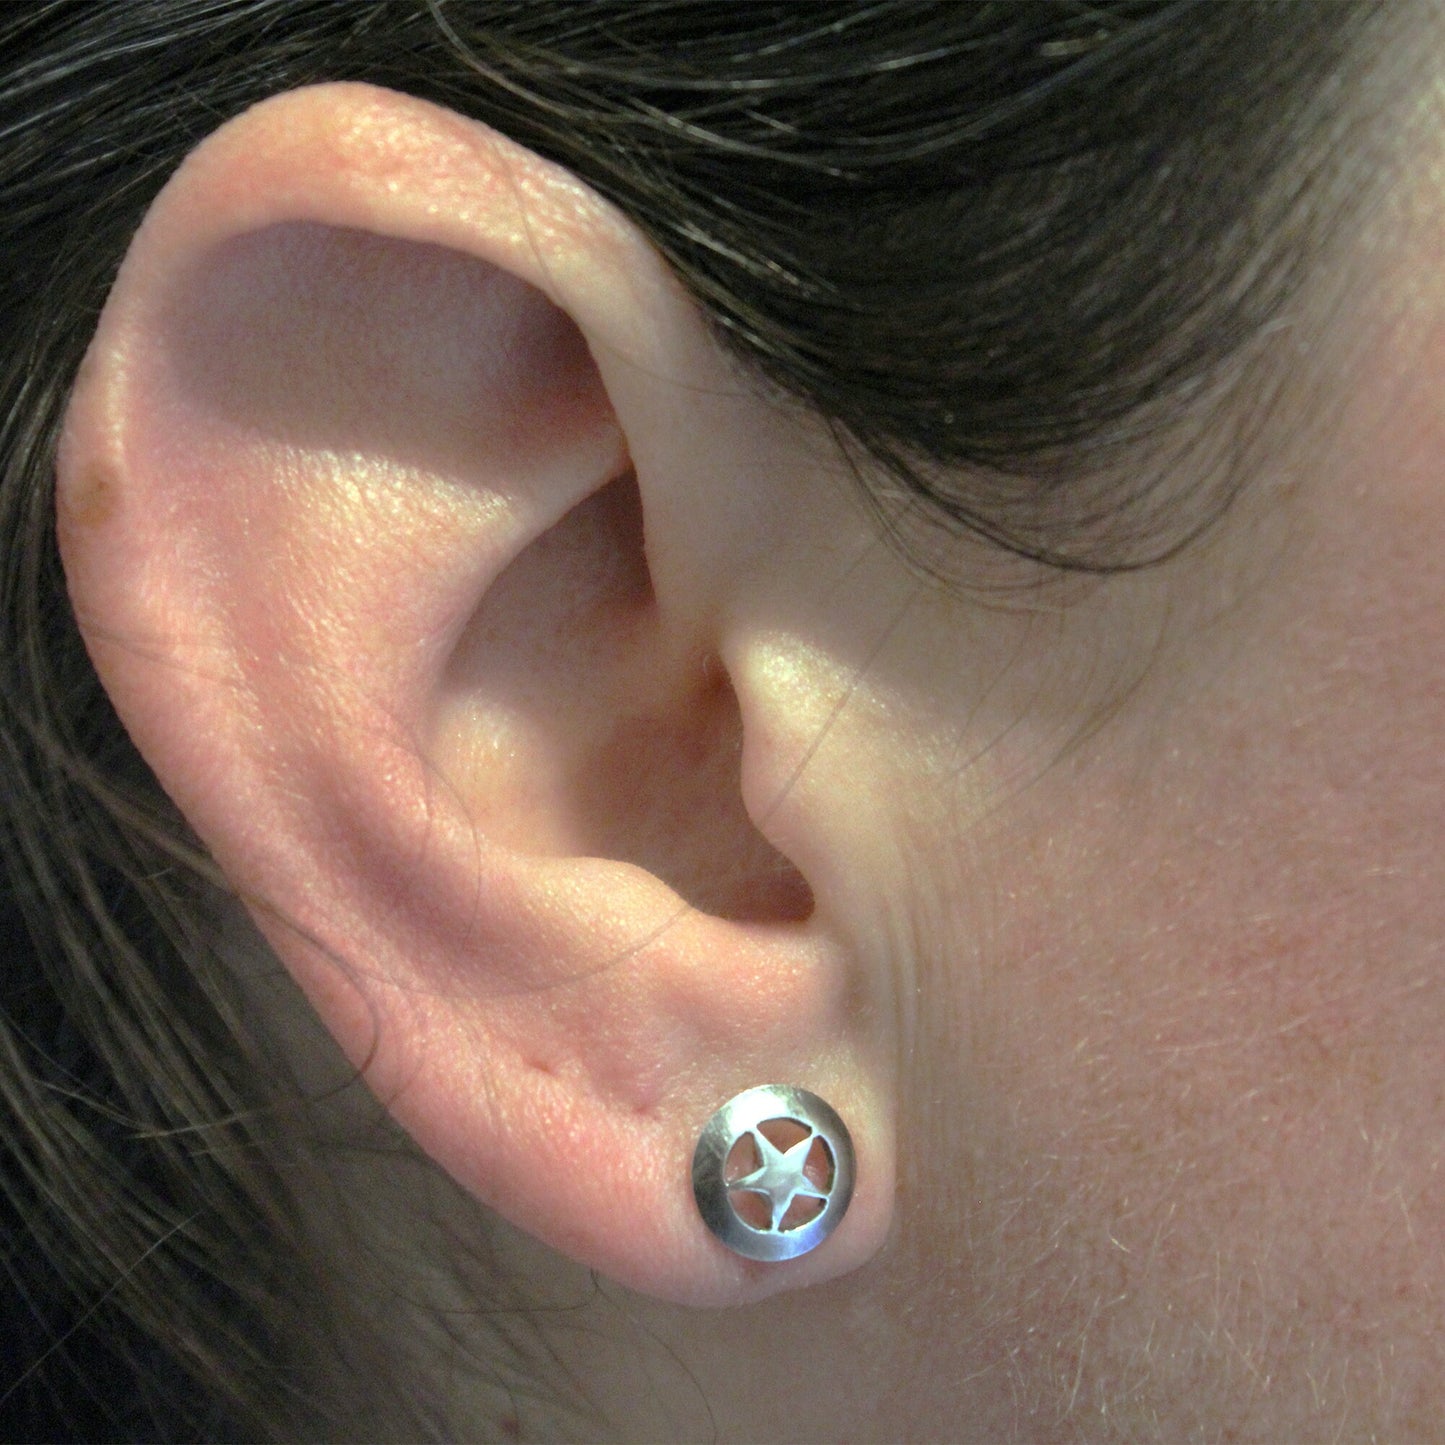 Texas Ranger star earrings in 925 silver